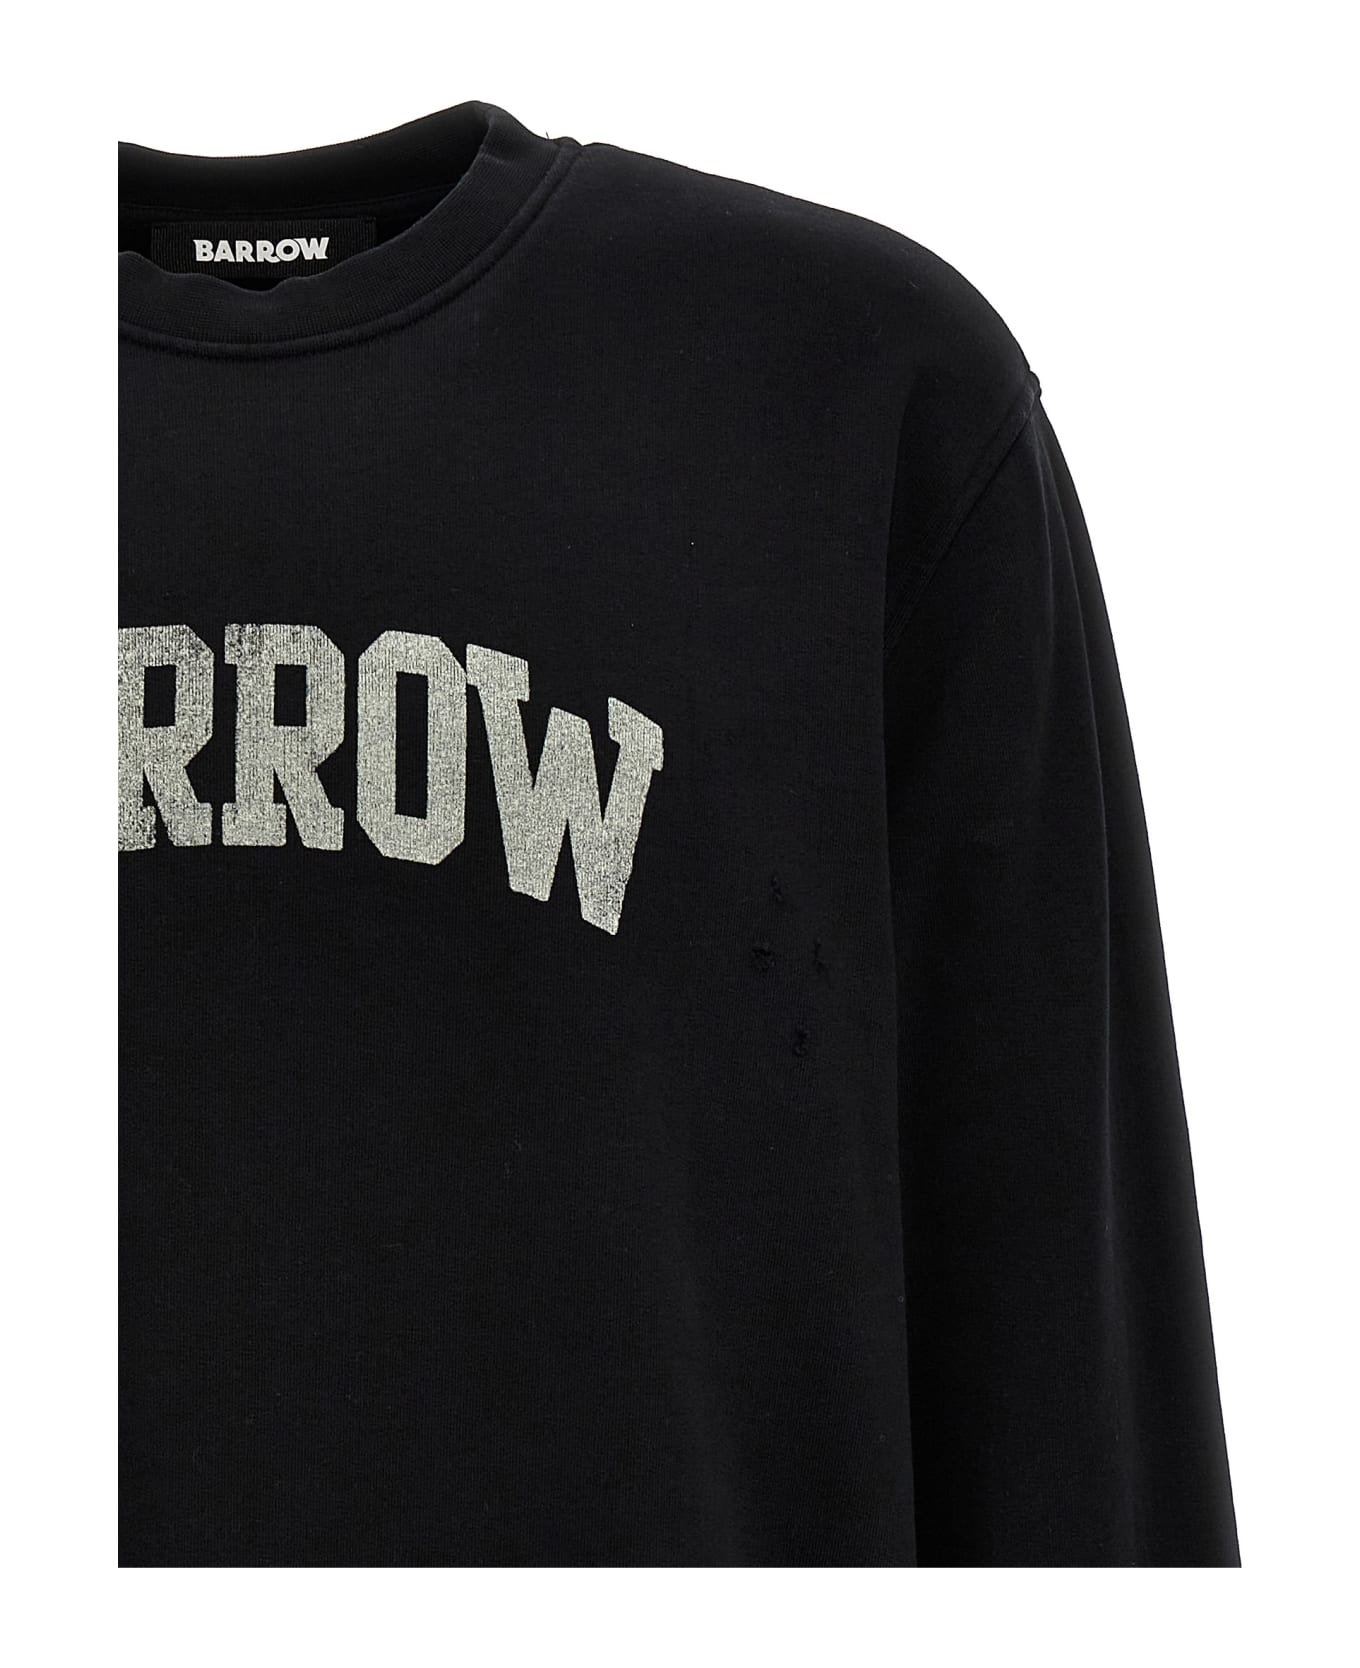 Barrow Logo Print Sweatshirt - NERO/BLACK